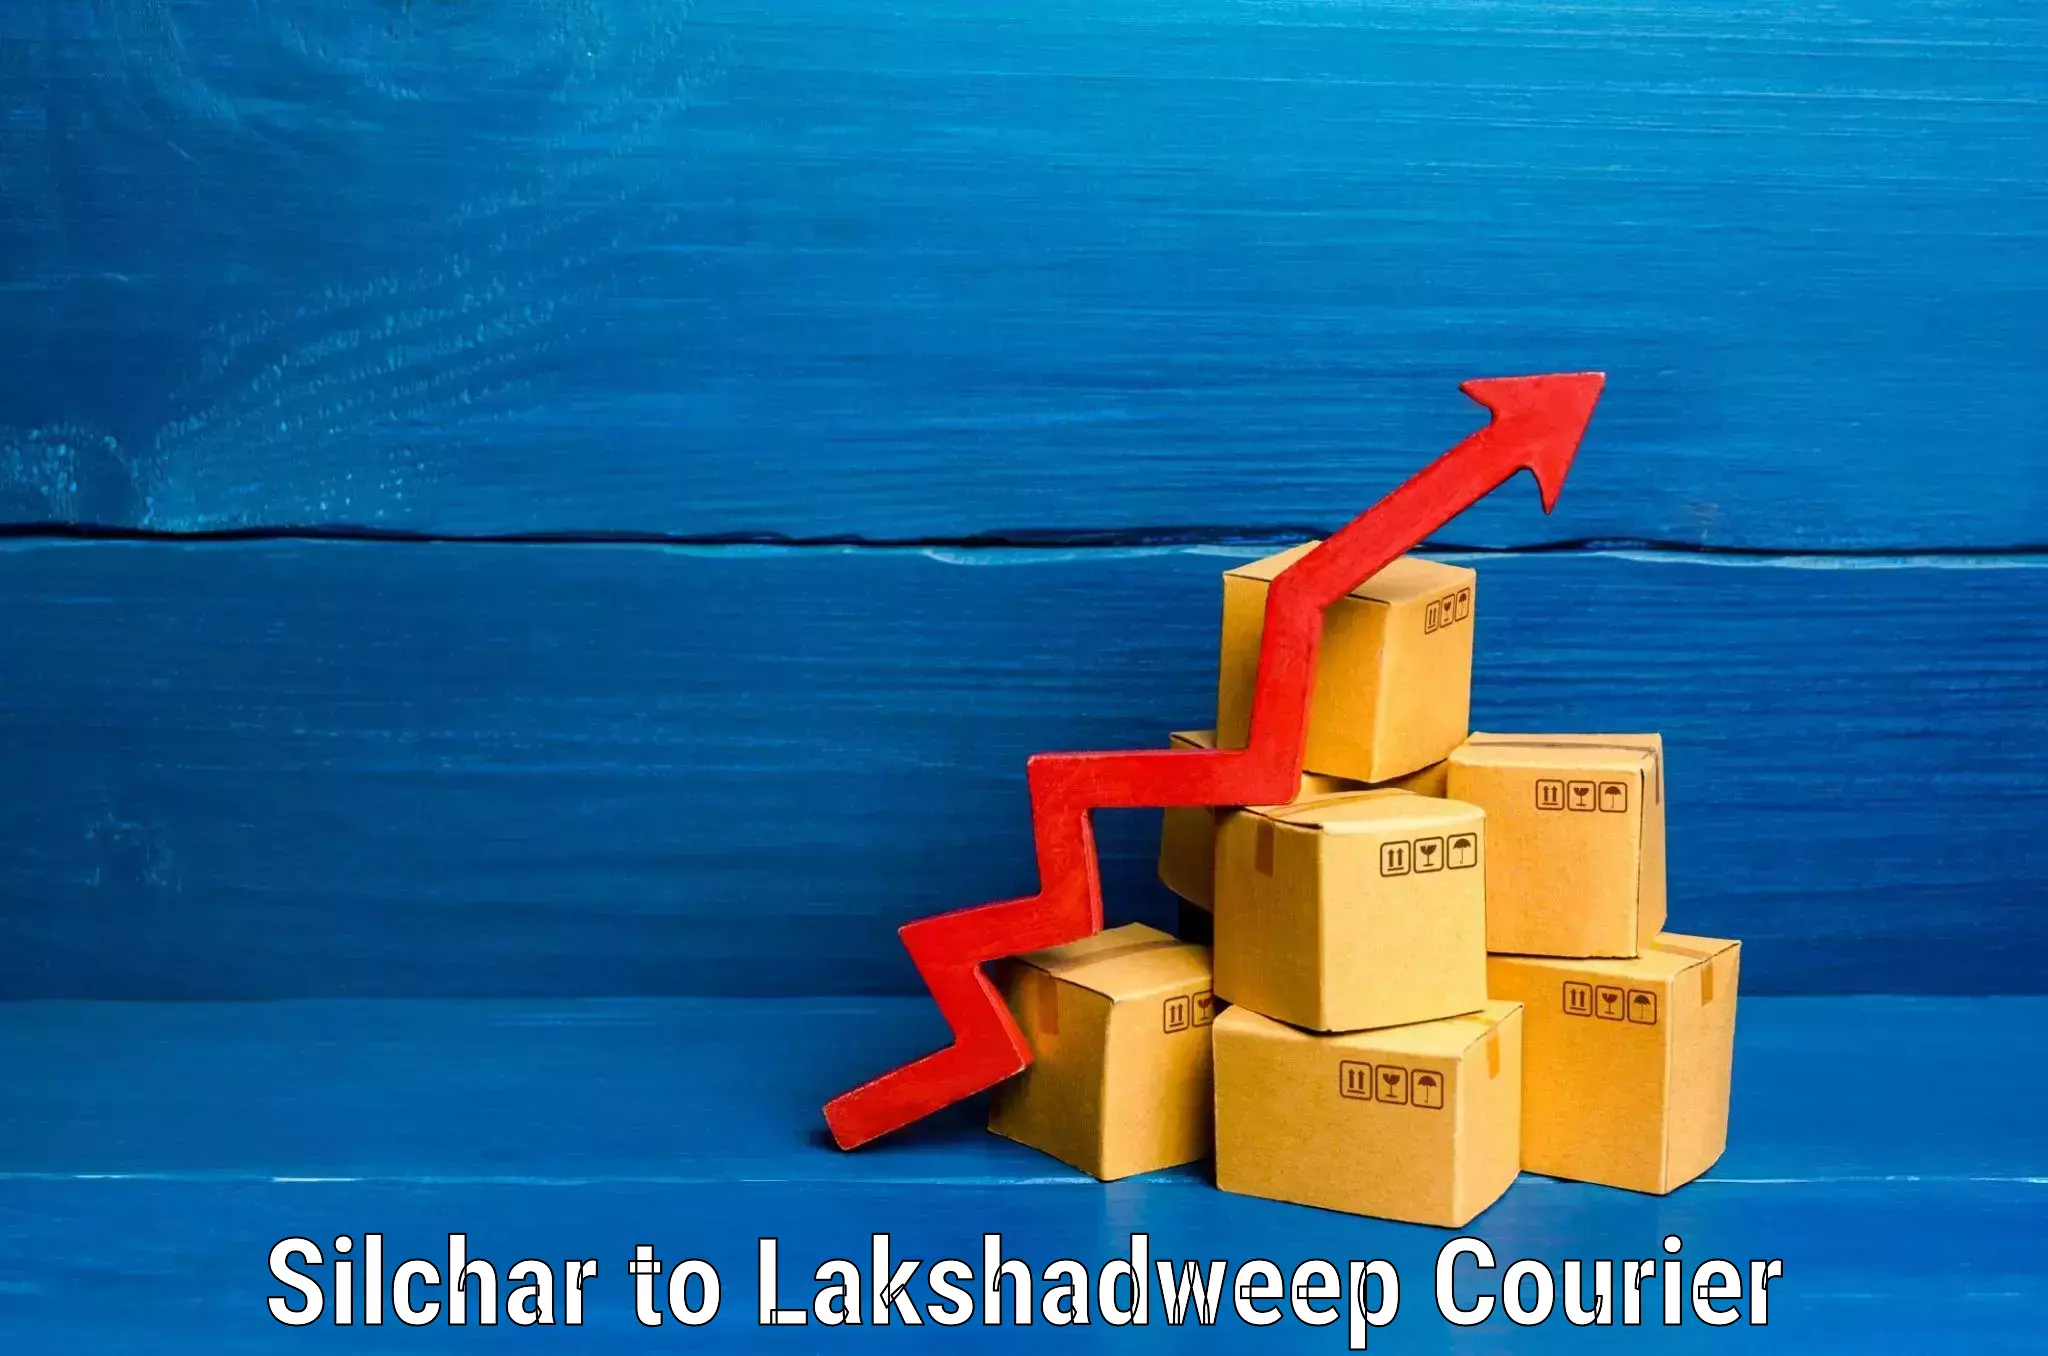 Luggage transport company Silchar to Lakshadweep